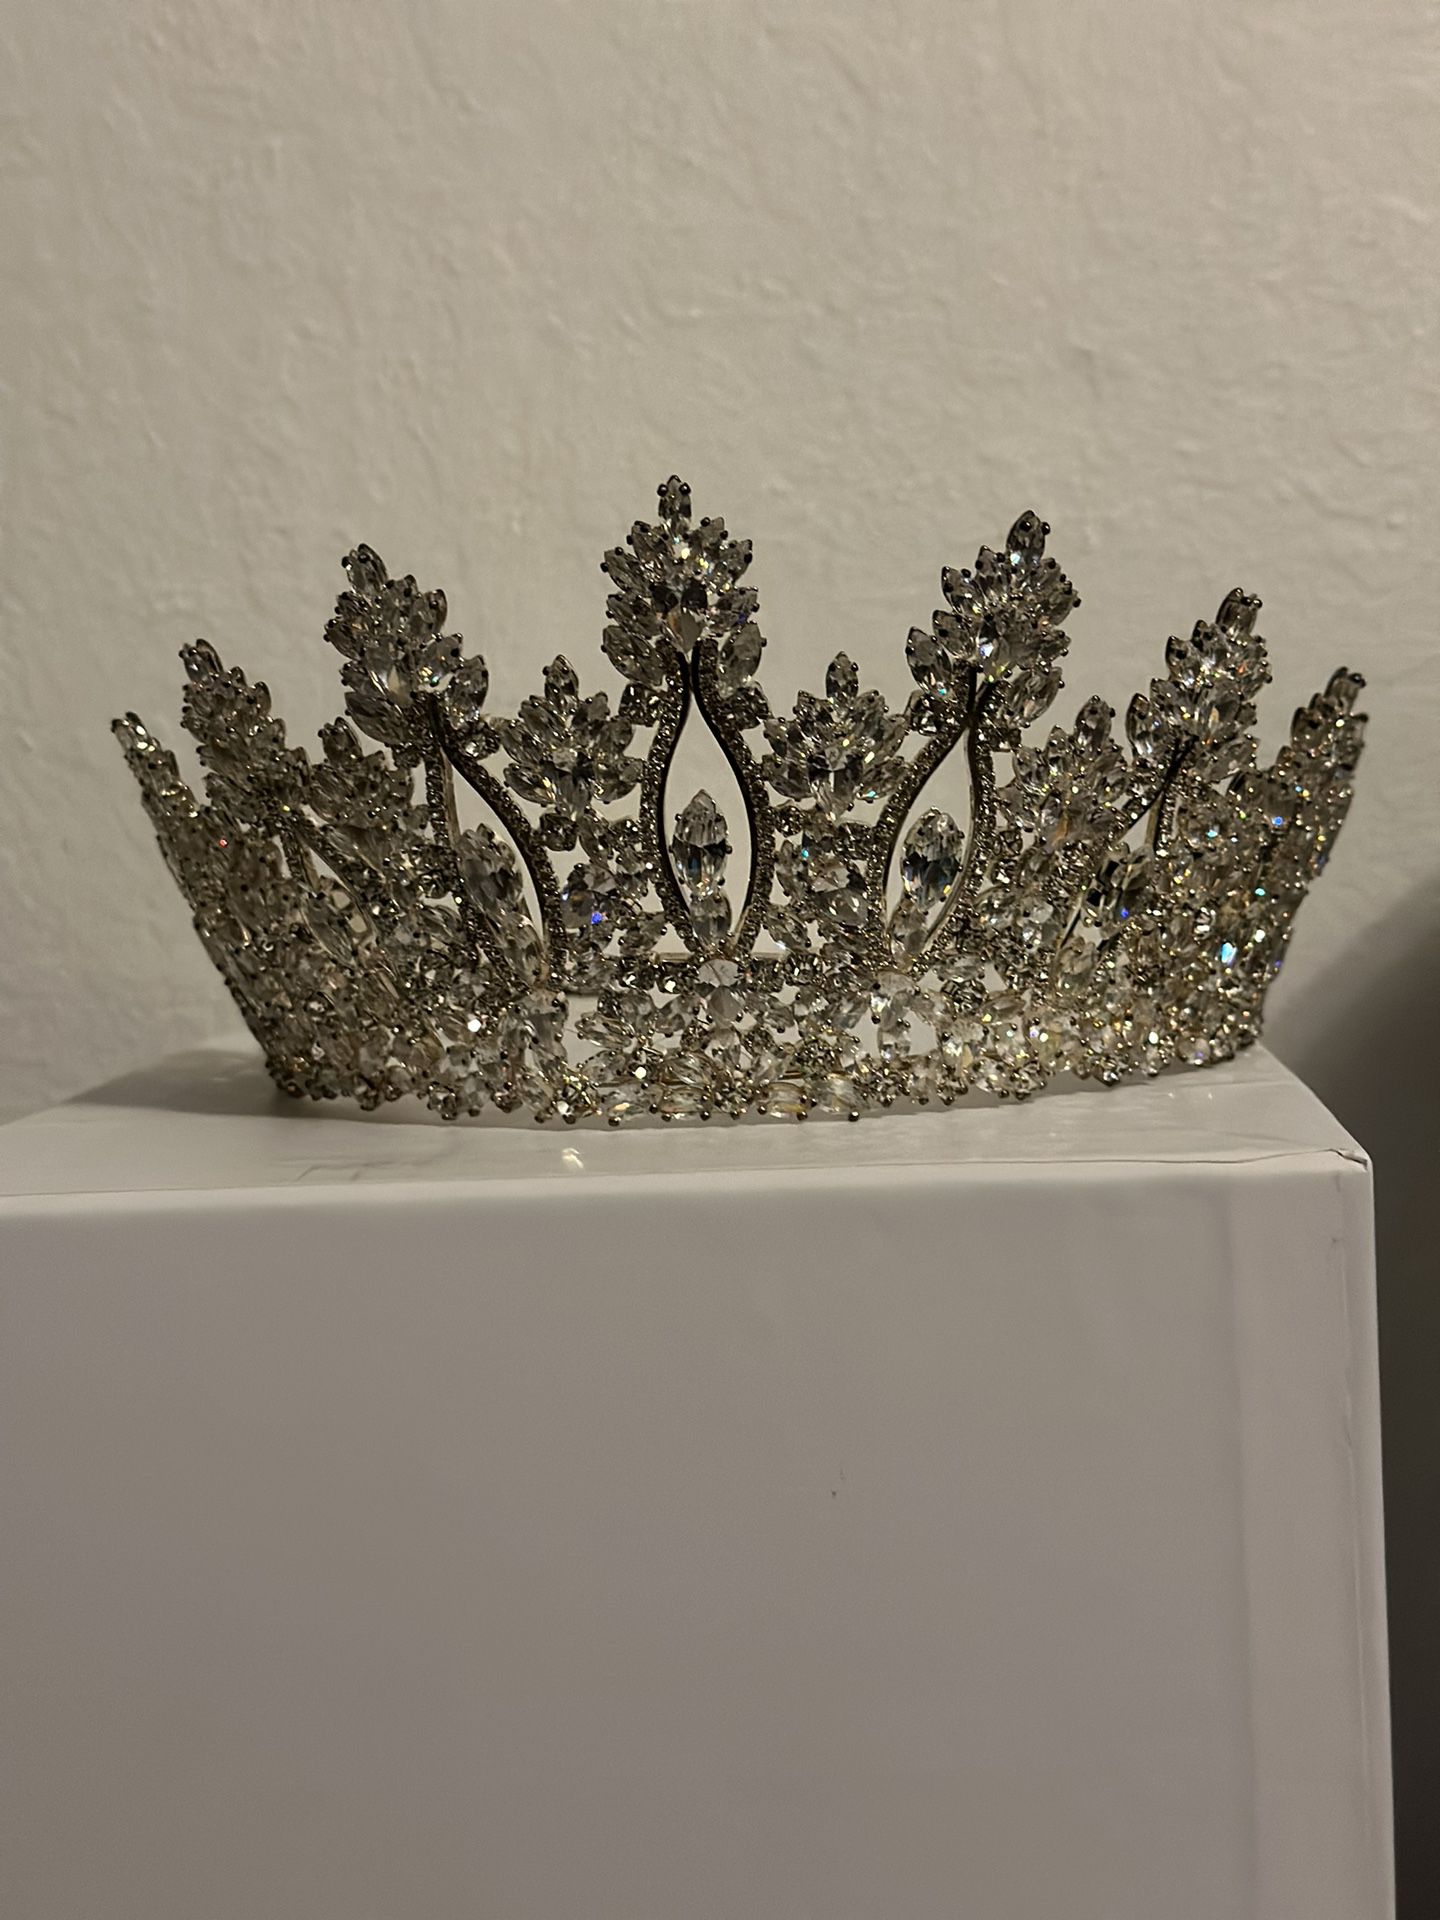 Rhinestone Crown